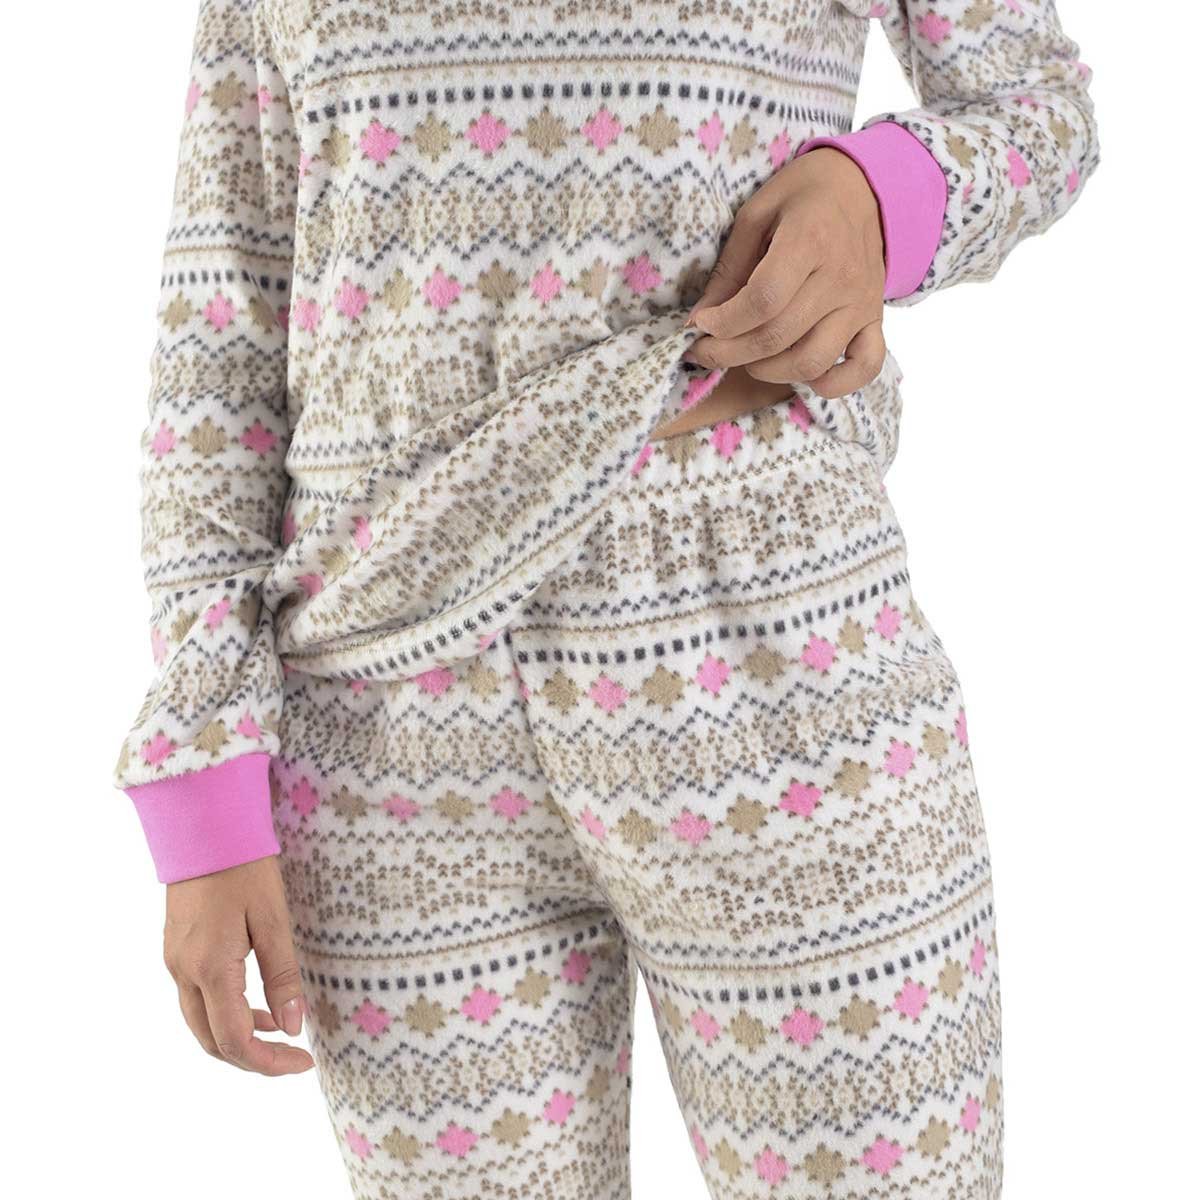 Pijama Minky Estampada Playera Y Pantalon la Nuit